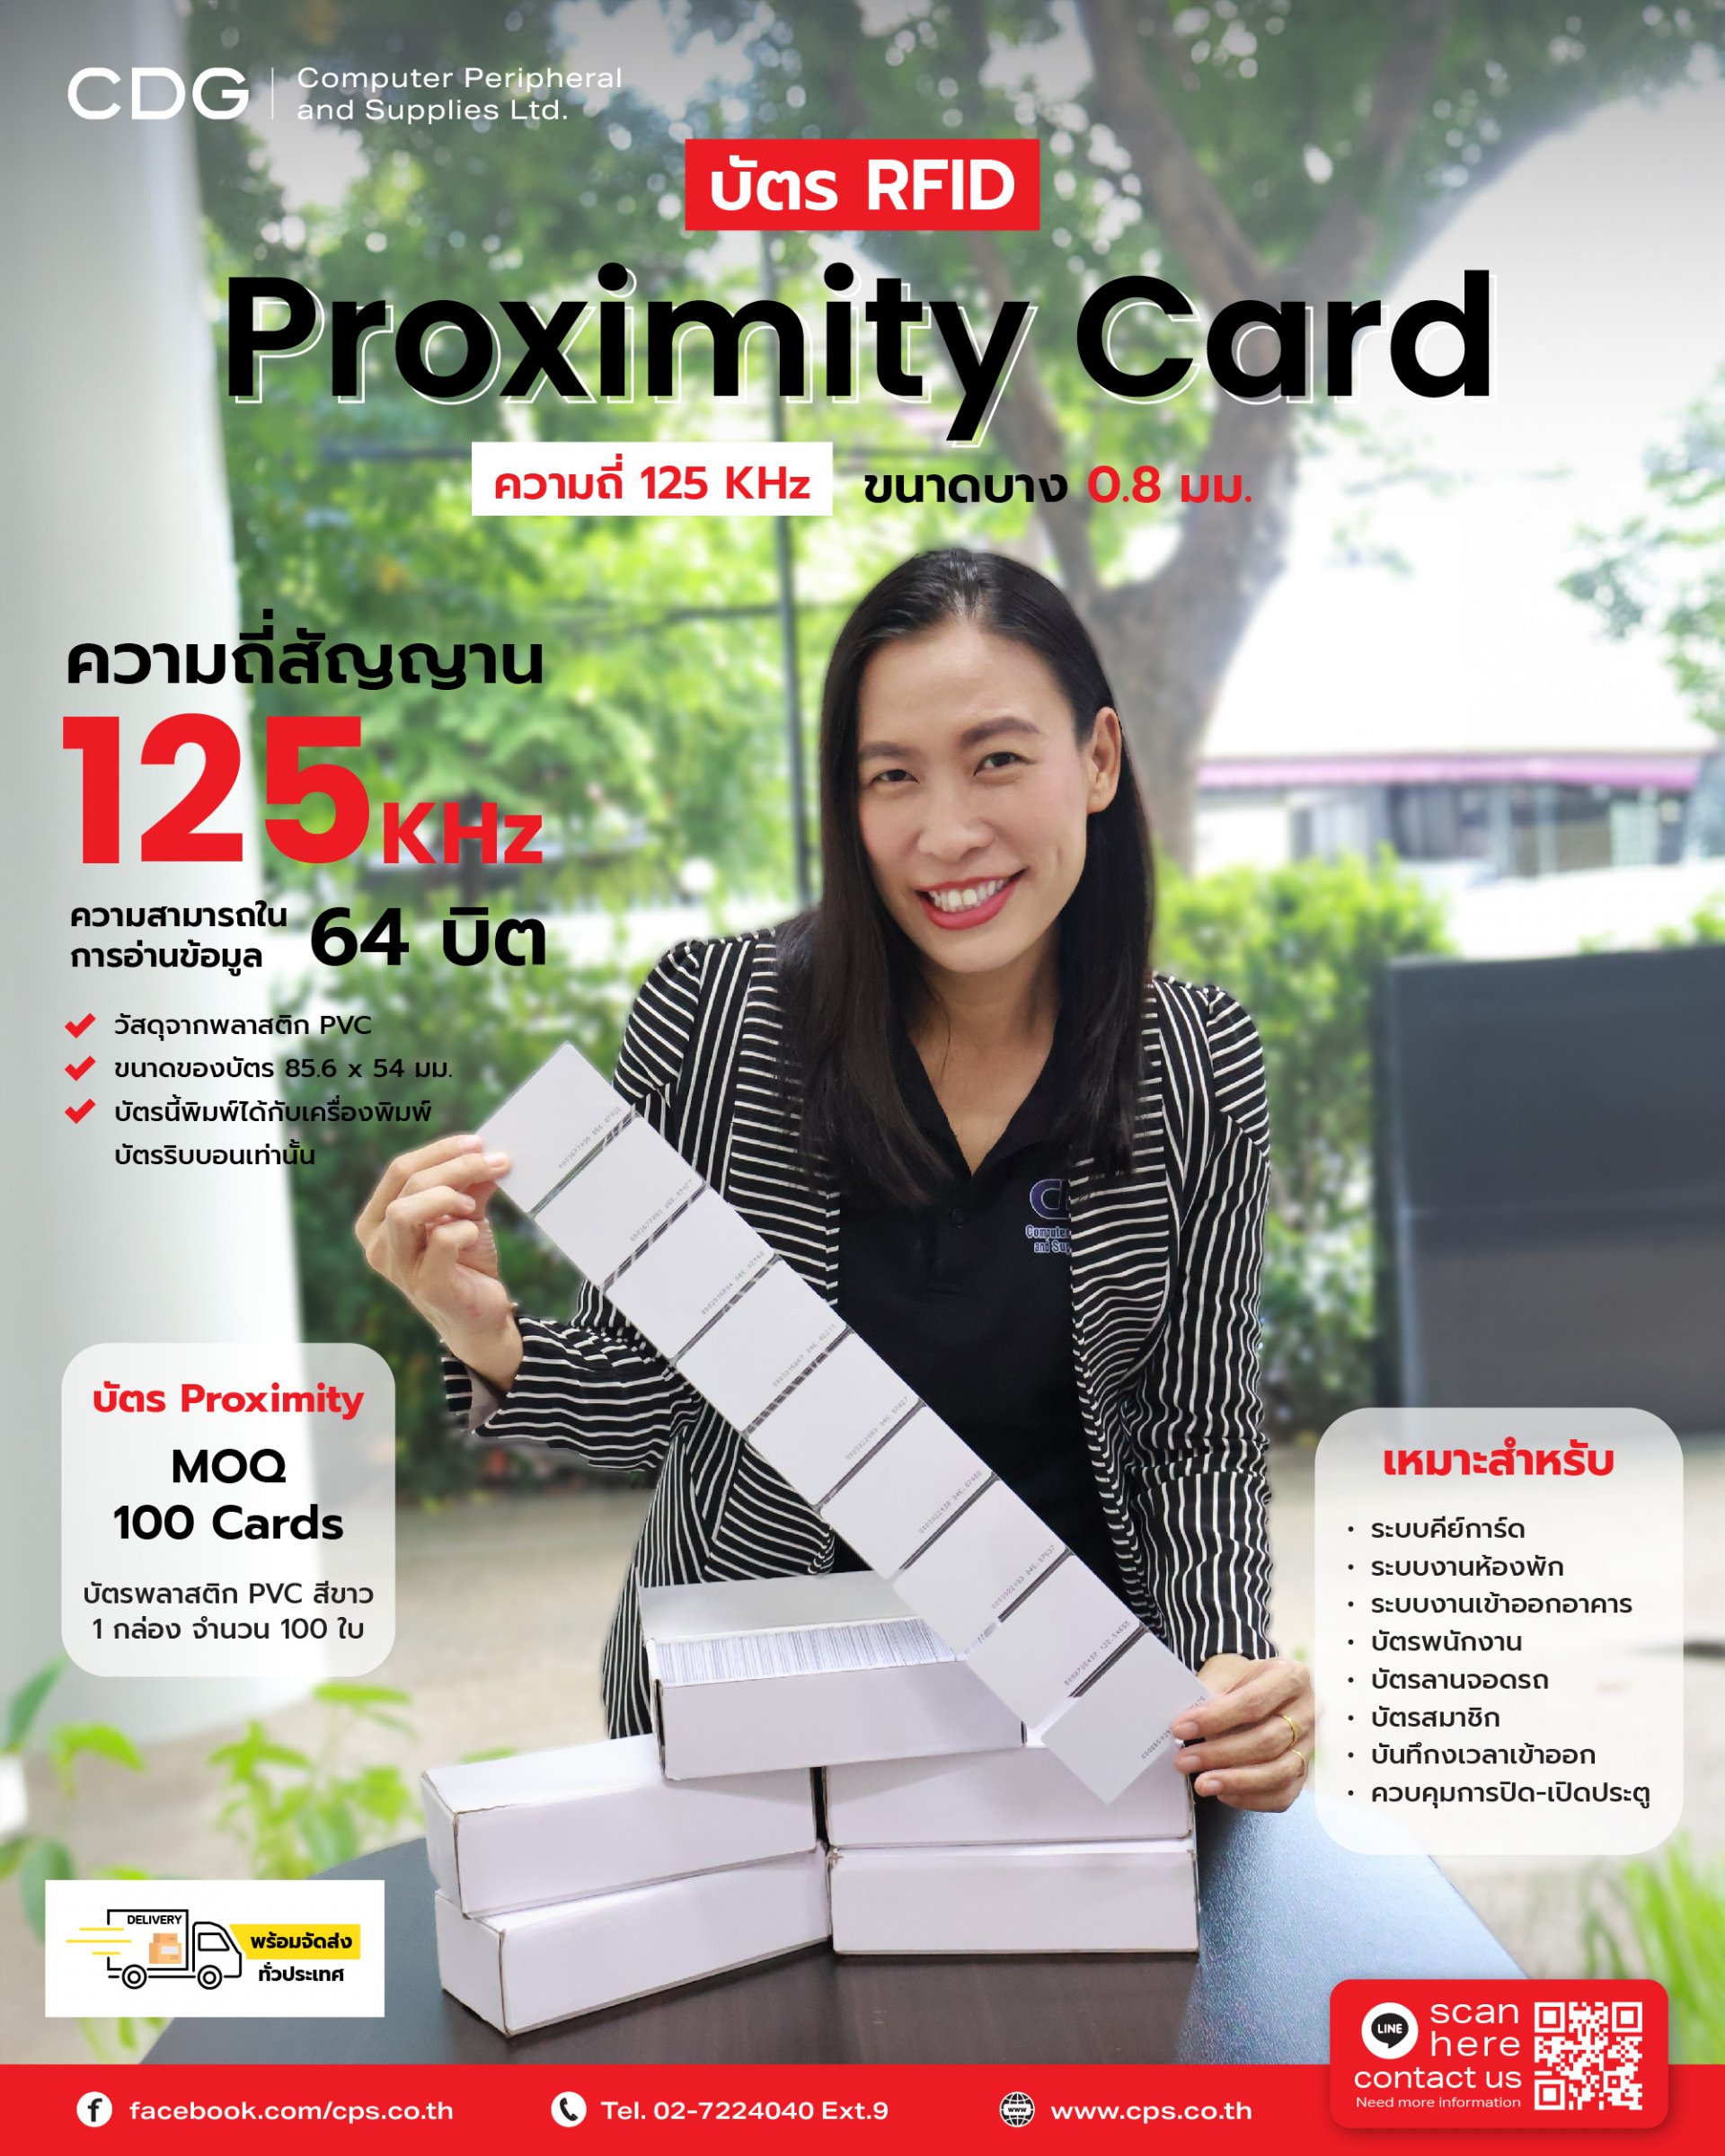 Proximity Card RFID 0.8 mm (thin card) frequency 125 KHz